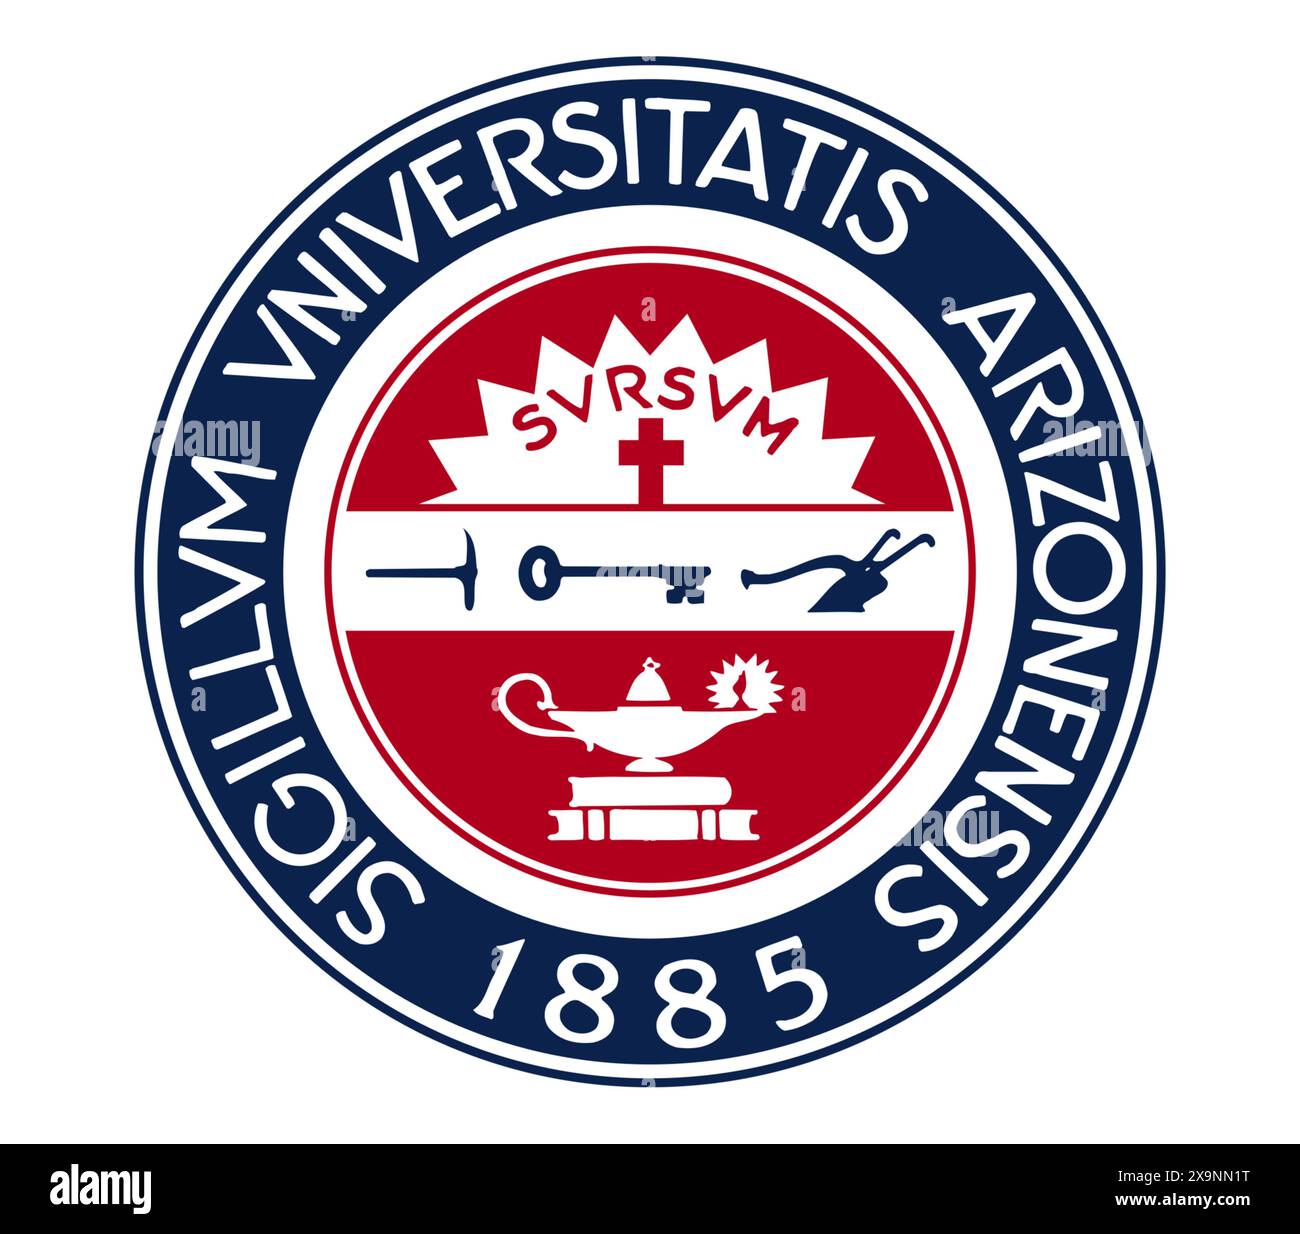 University of Arizona logo icon Stock Photo